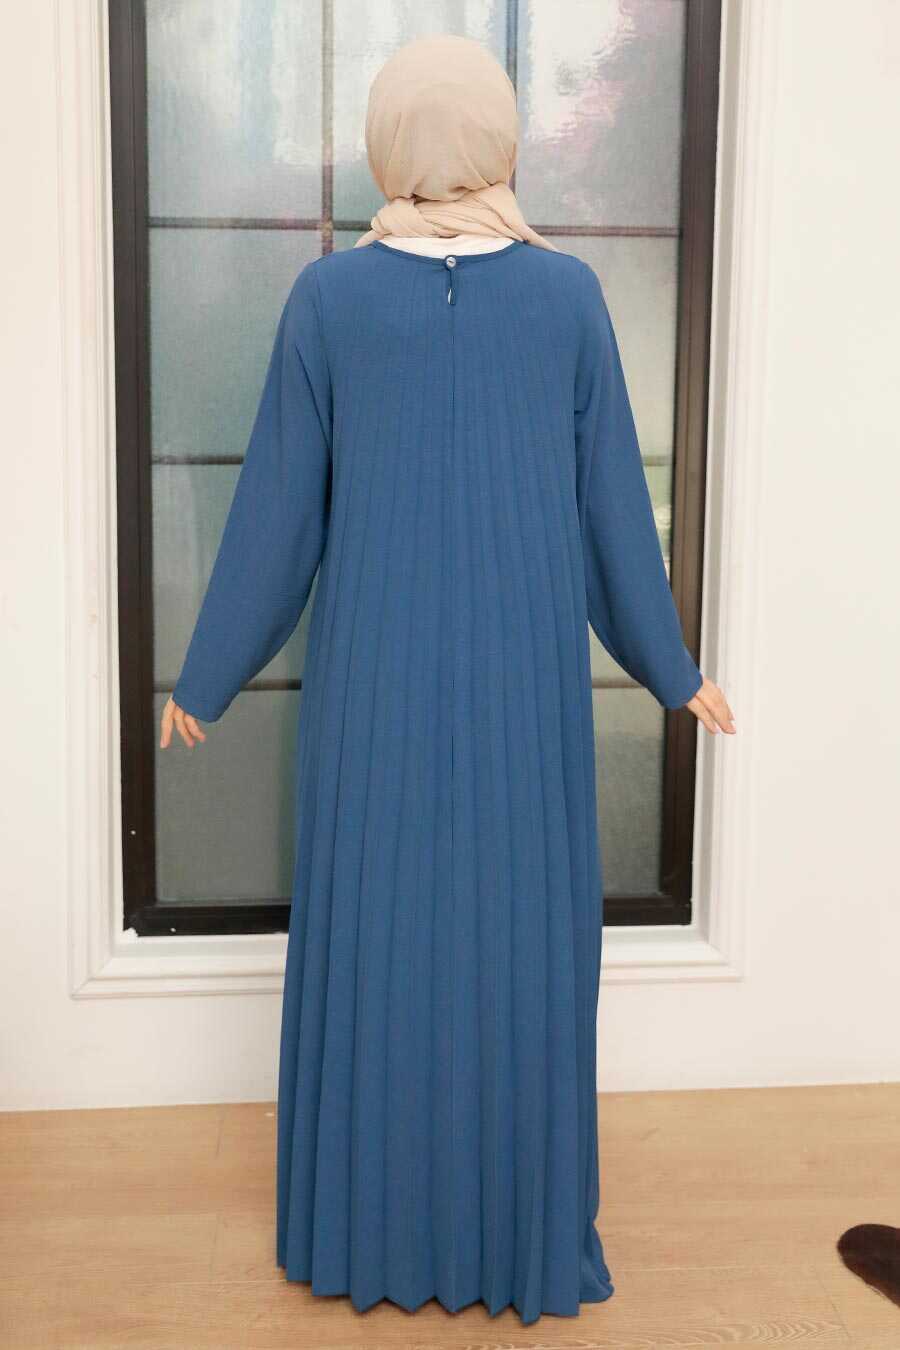 İndigo Blue Hijab Dress 76840IM